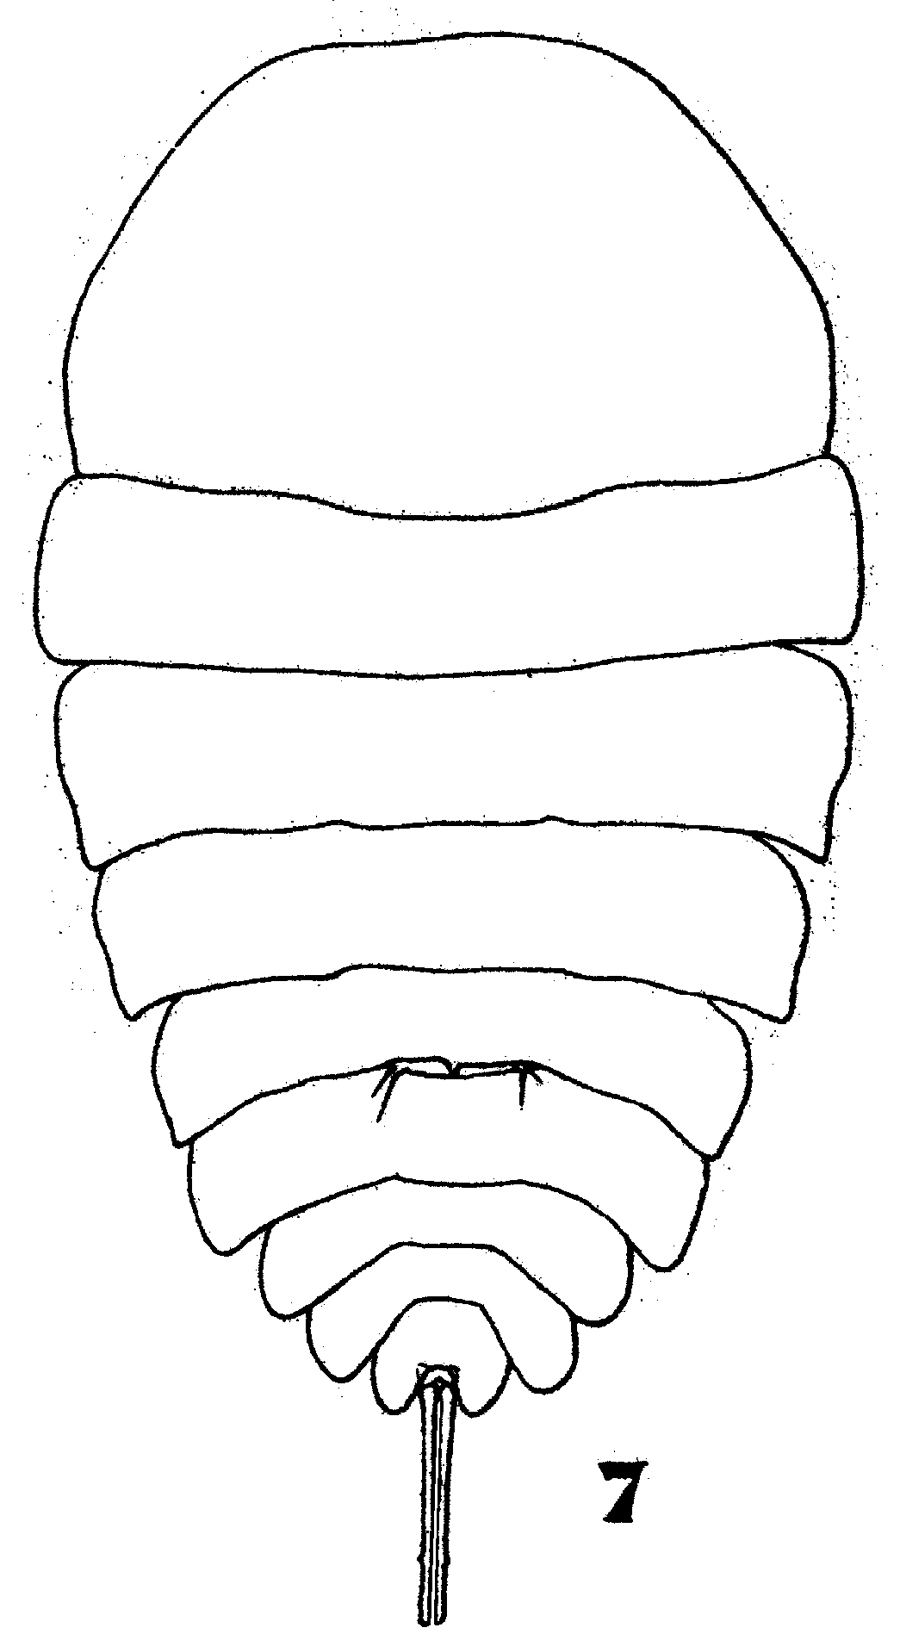 Species Copilia mirabilis - Plate 9 of morphological figures